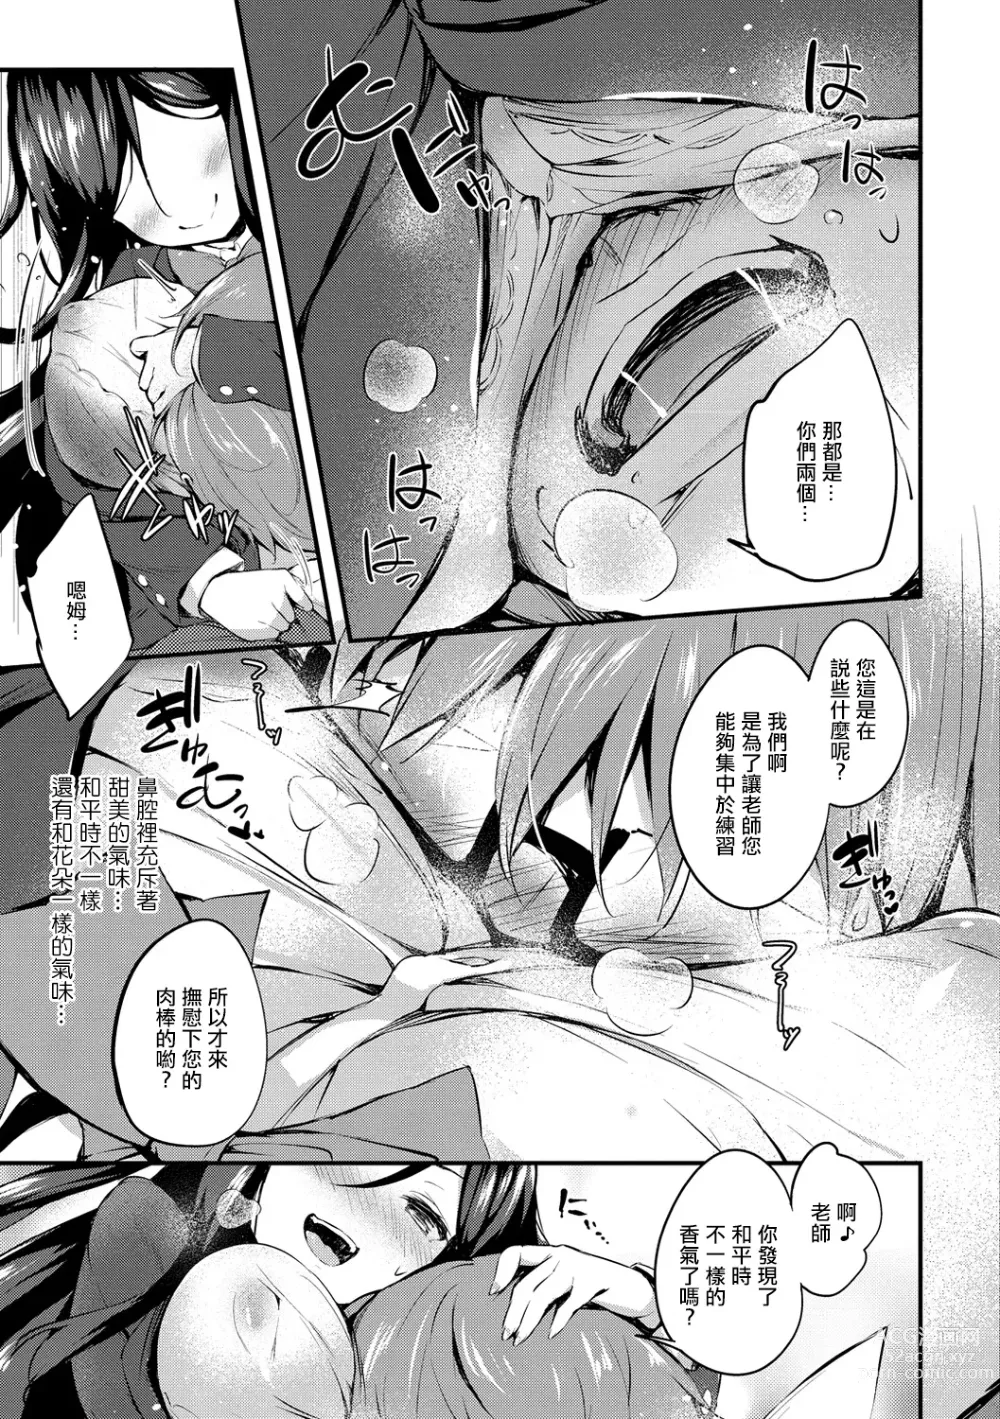 Page 5 of manga Sotsugyou Gokko